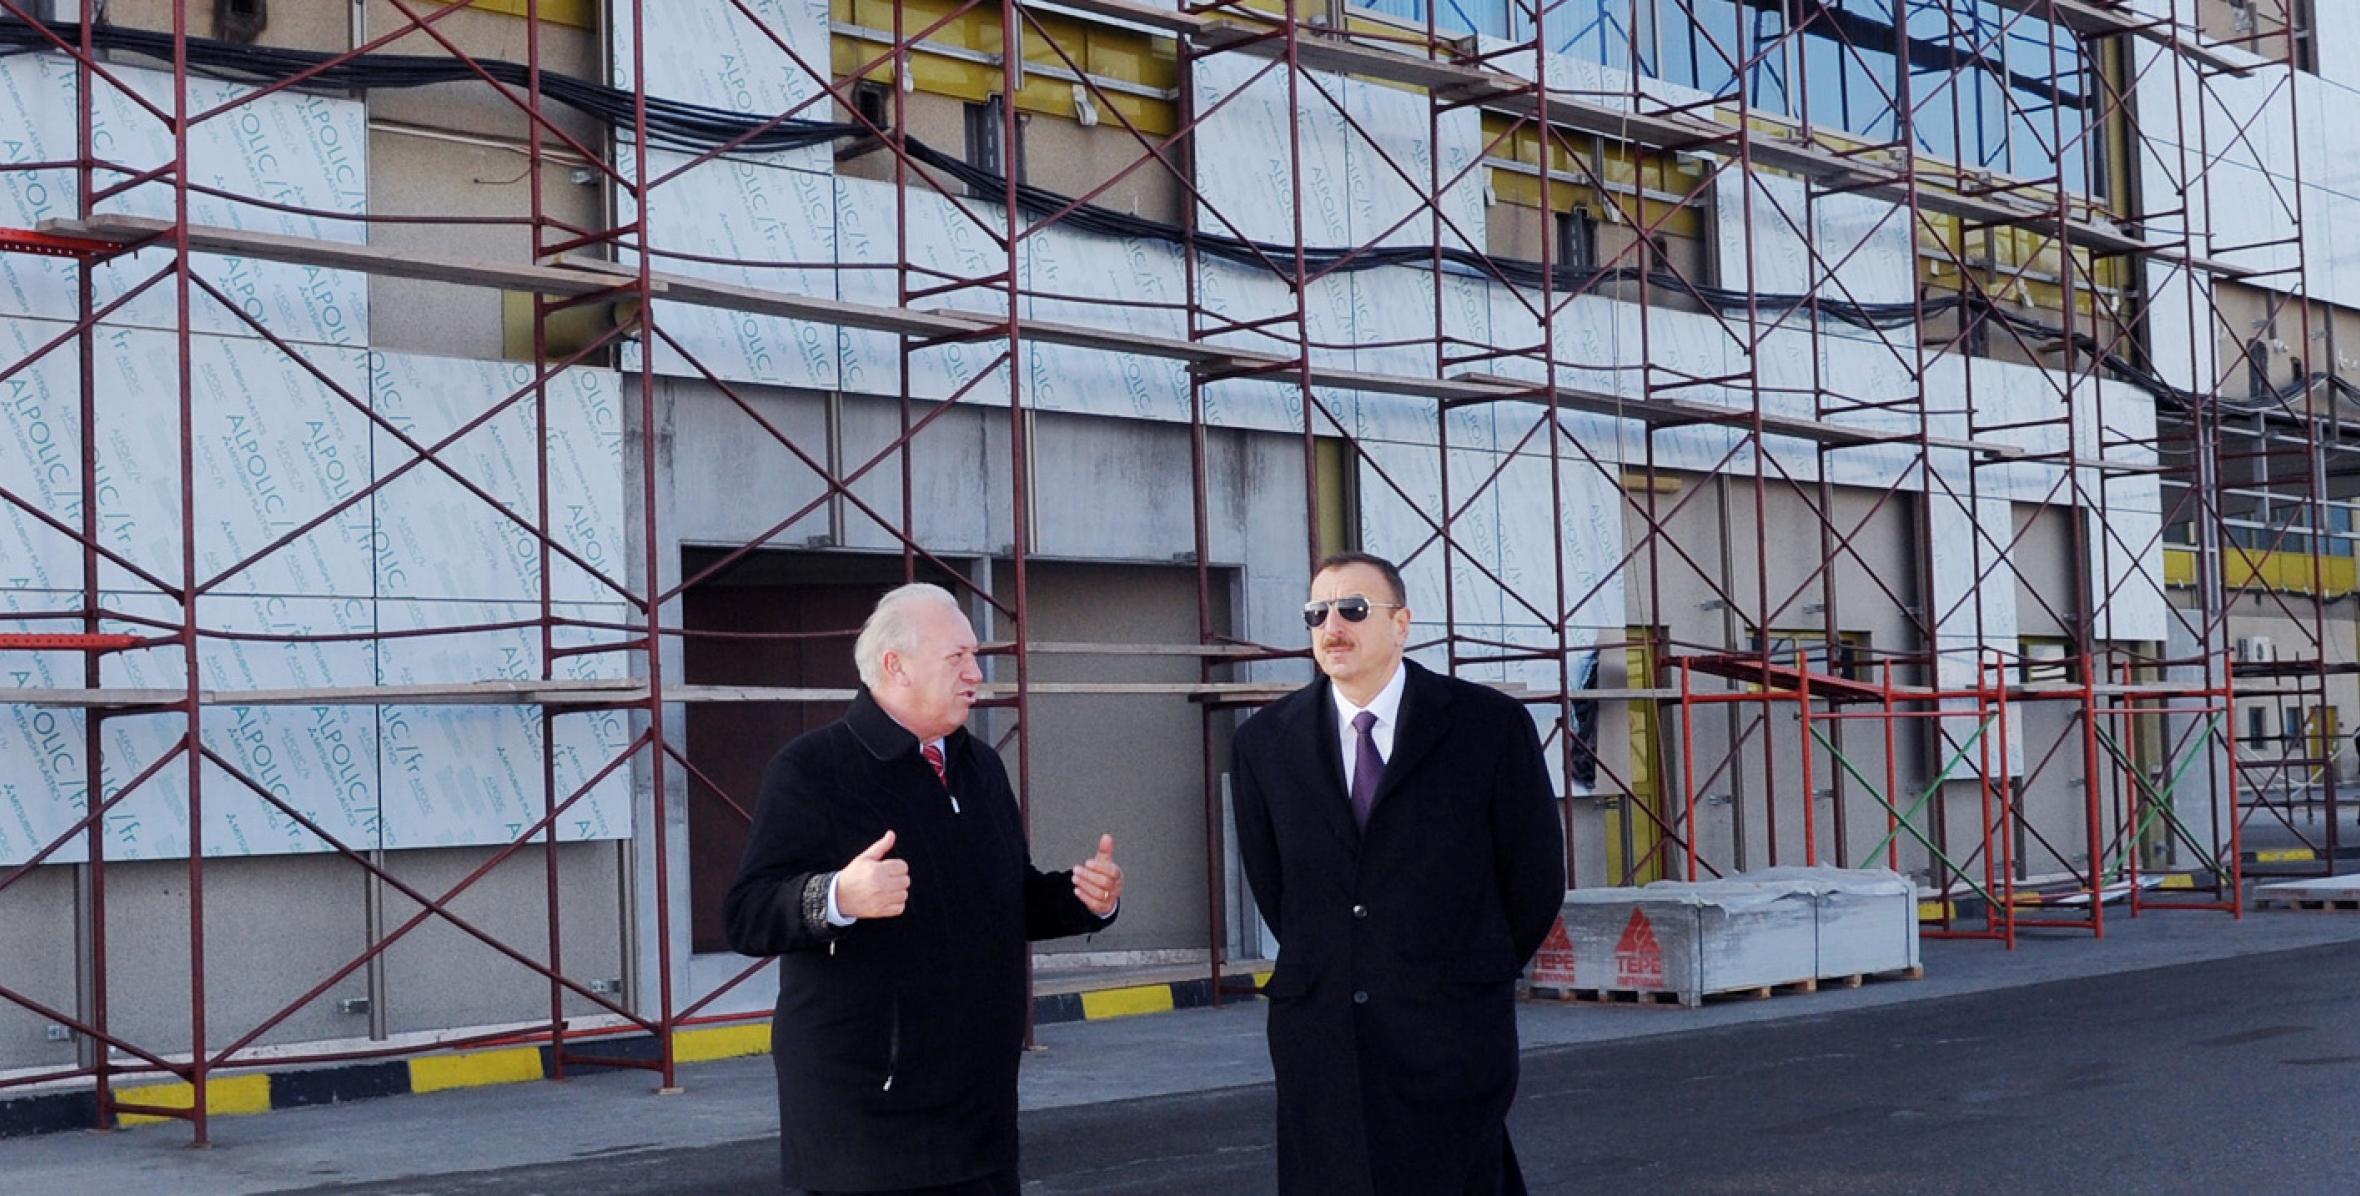 Ilham Aliyev reviewed progress of construction of a new air terminal at the Heydar Aliyev International Airport